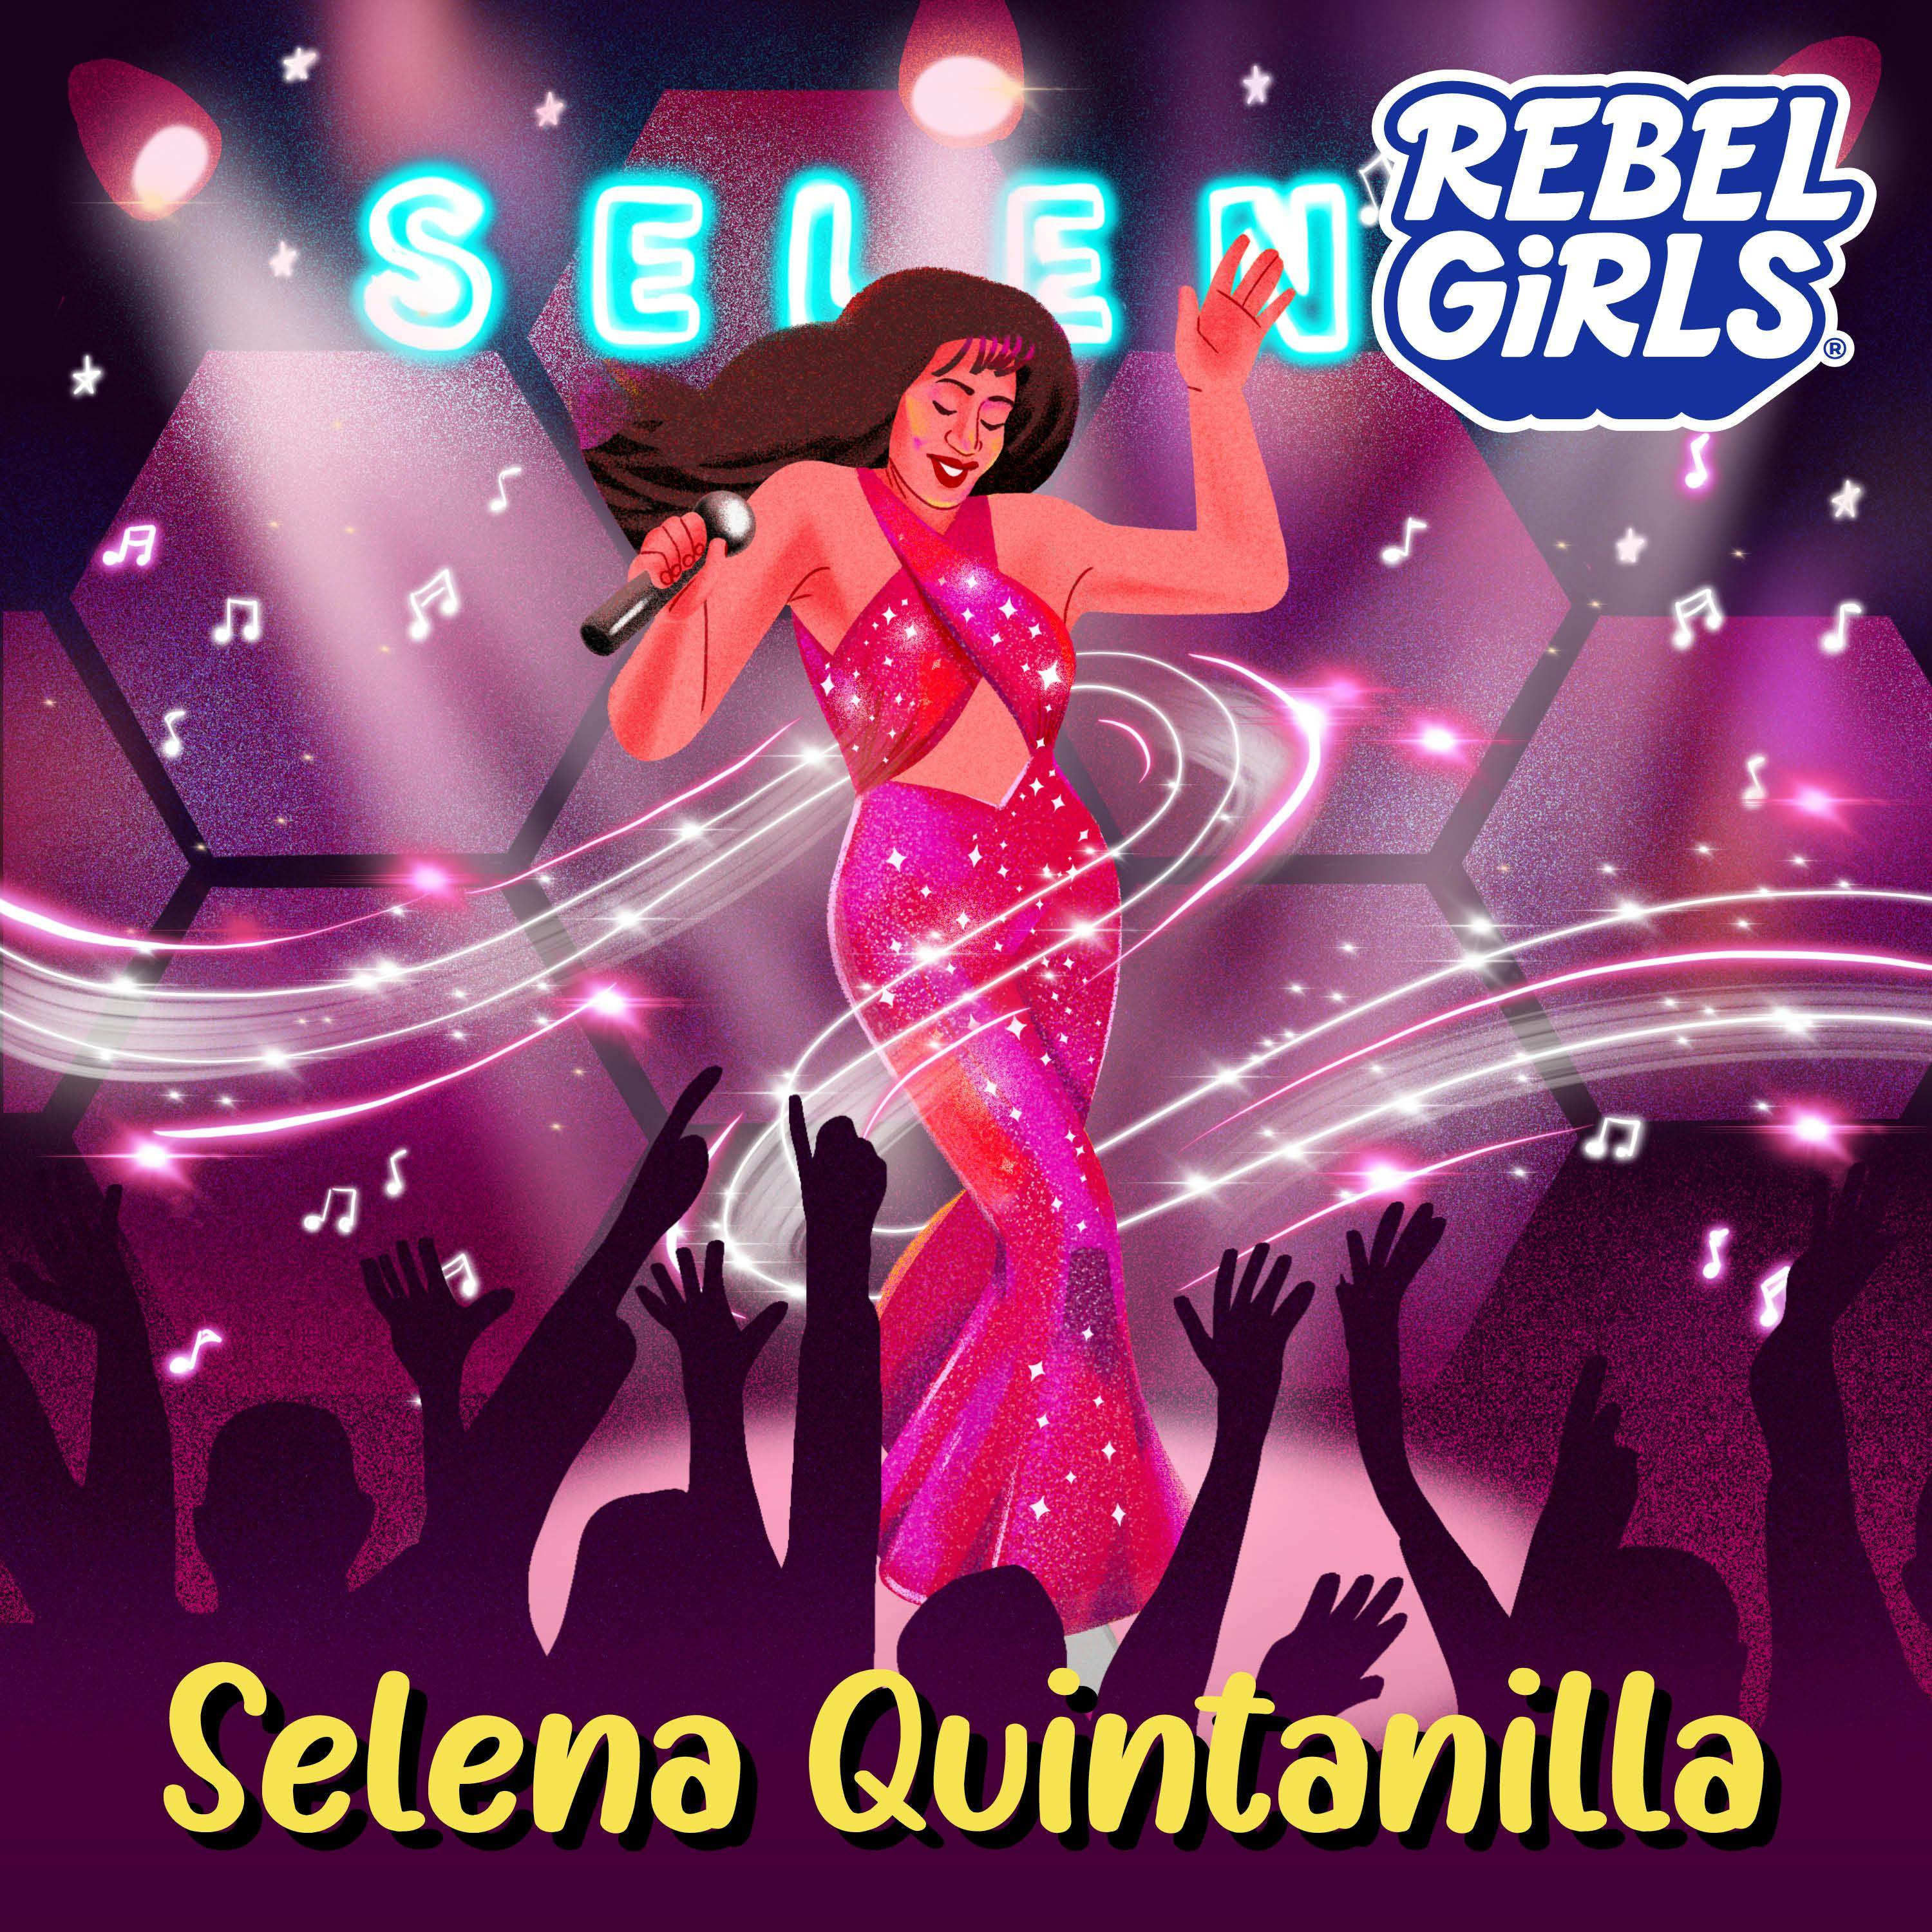 Selena Quintanilla: The Queen of Tejano Music